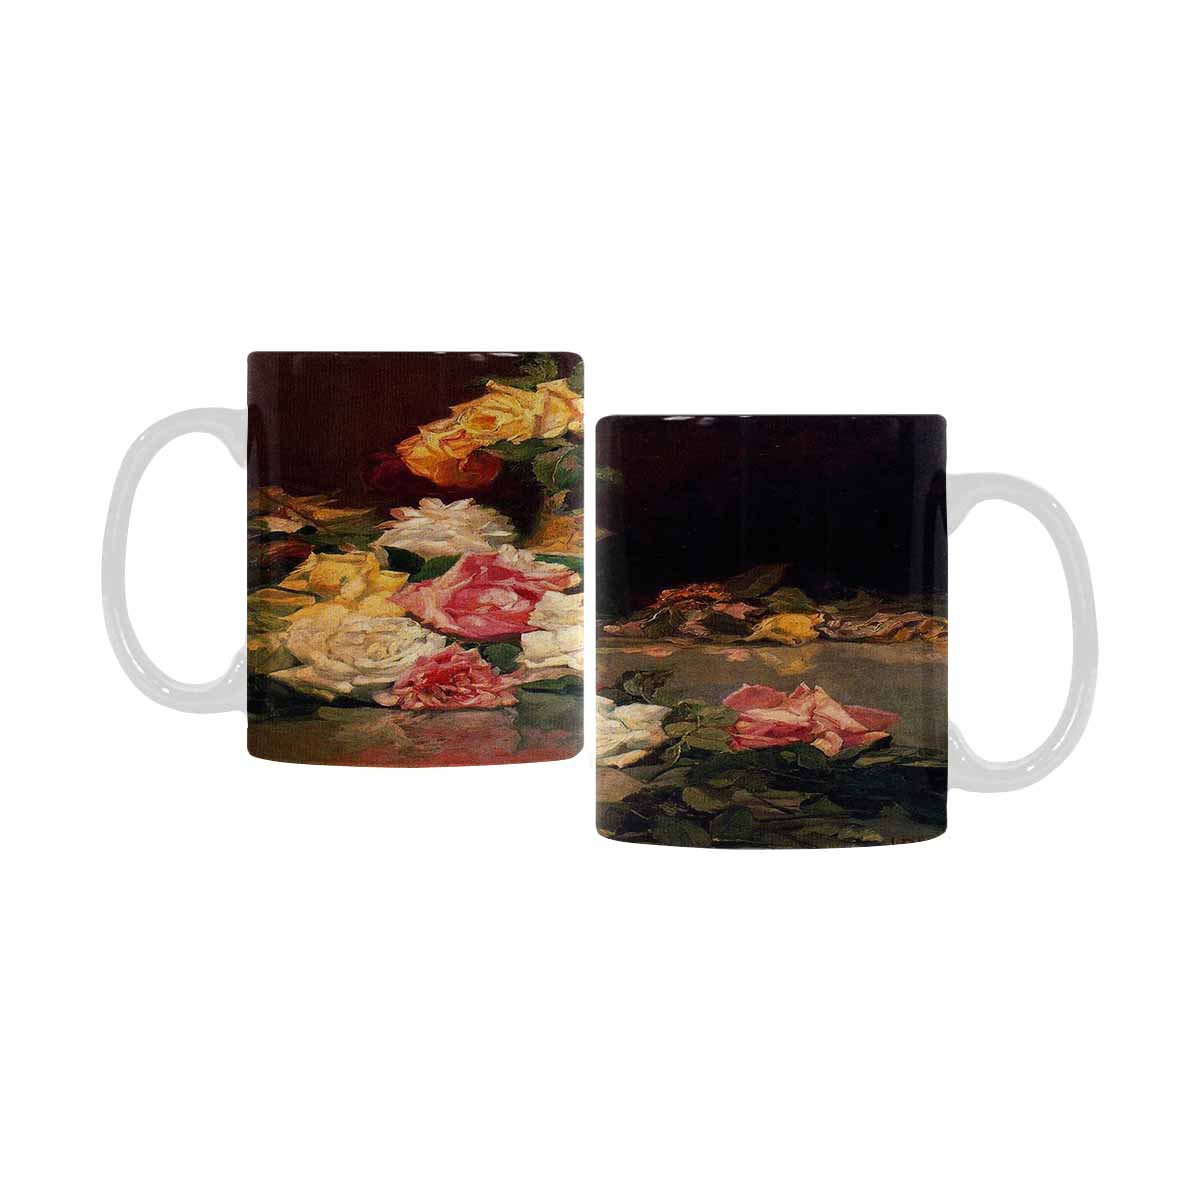 Vintage floral coffee mug or tea cup, Design 37